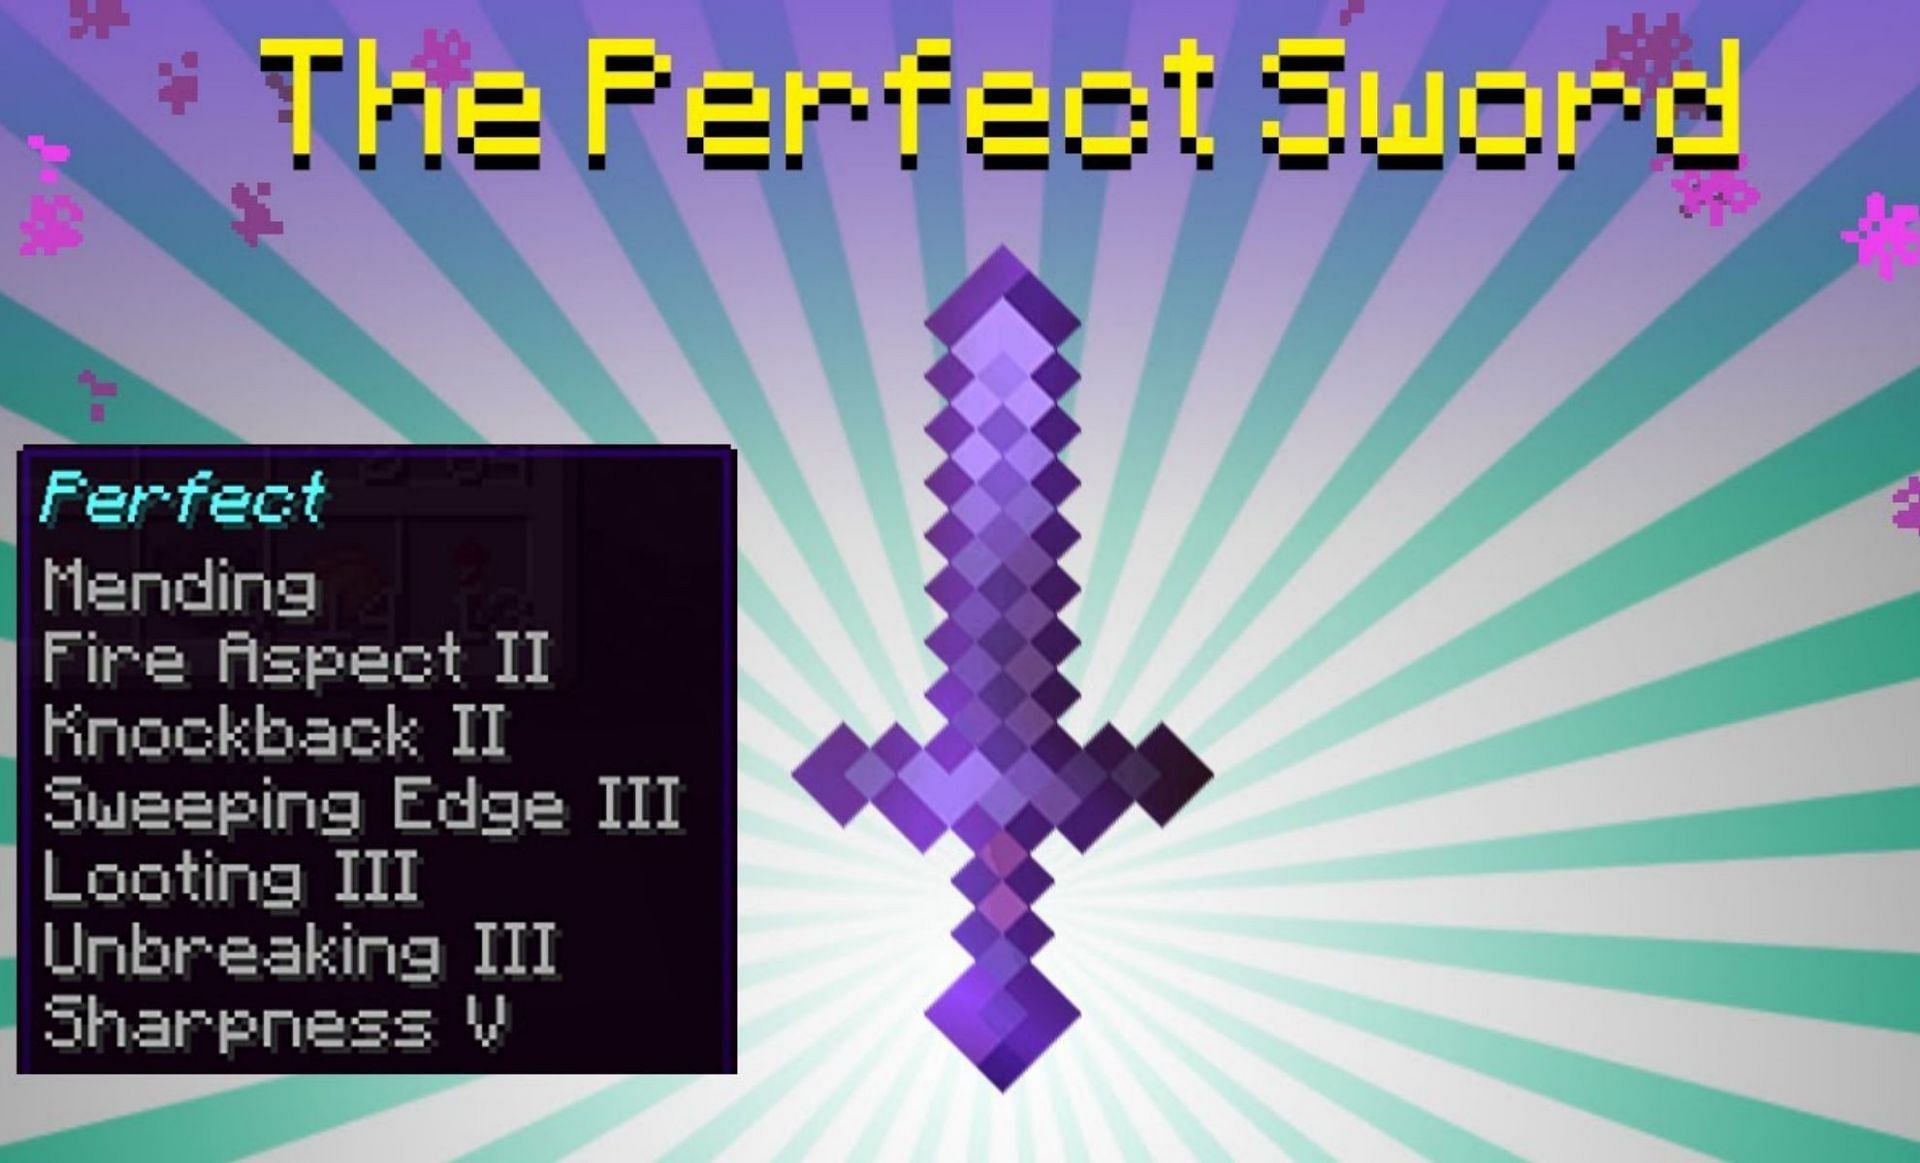 10 Best Sword Enchantments in Minecraft (2022)